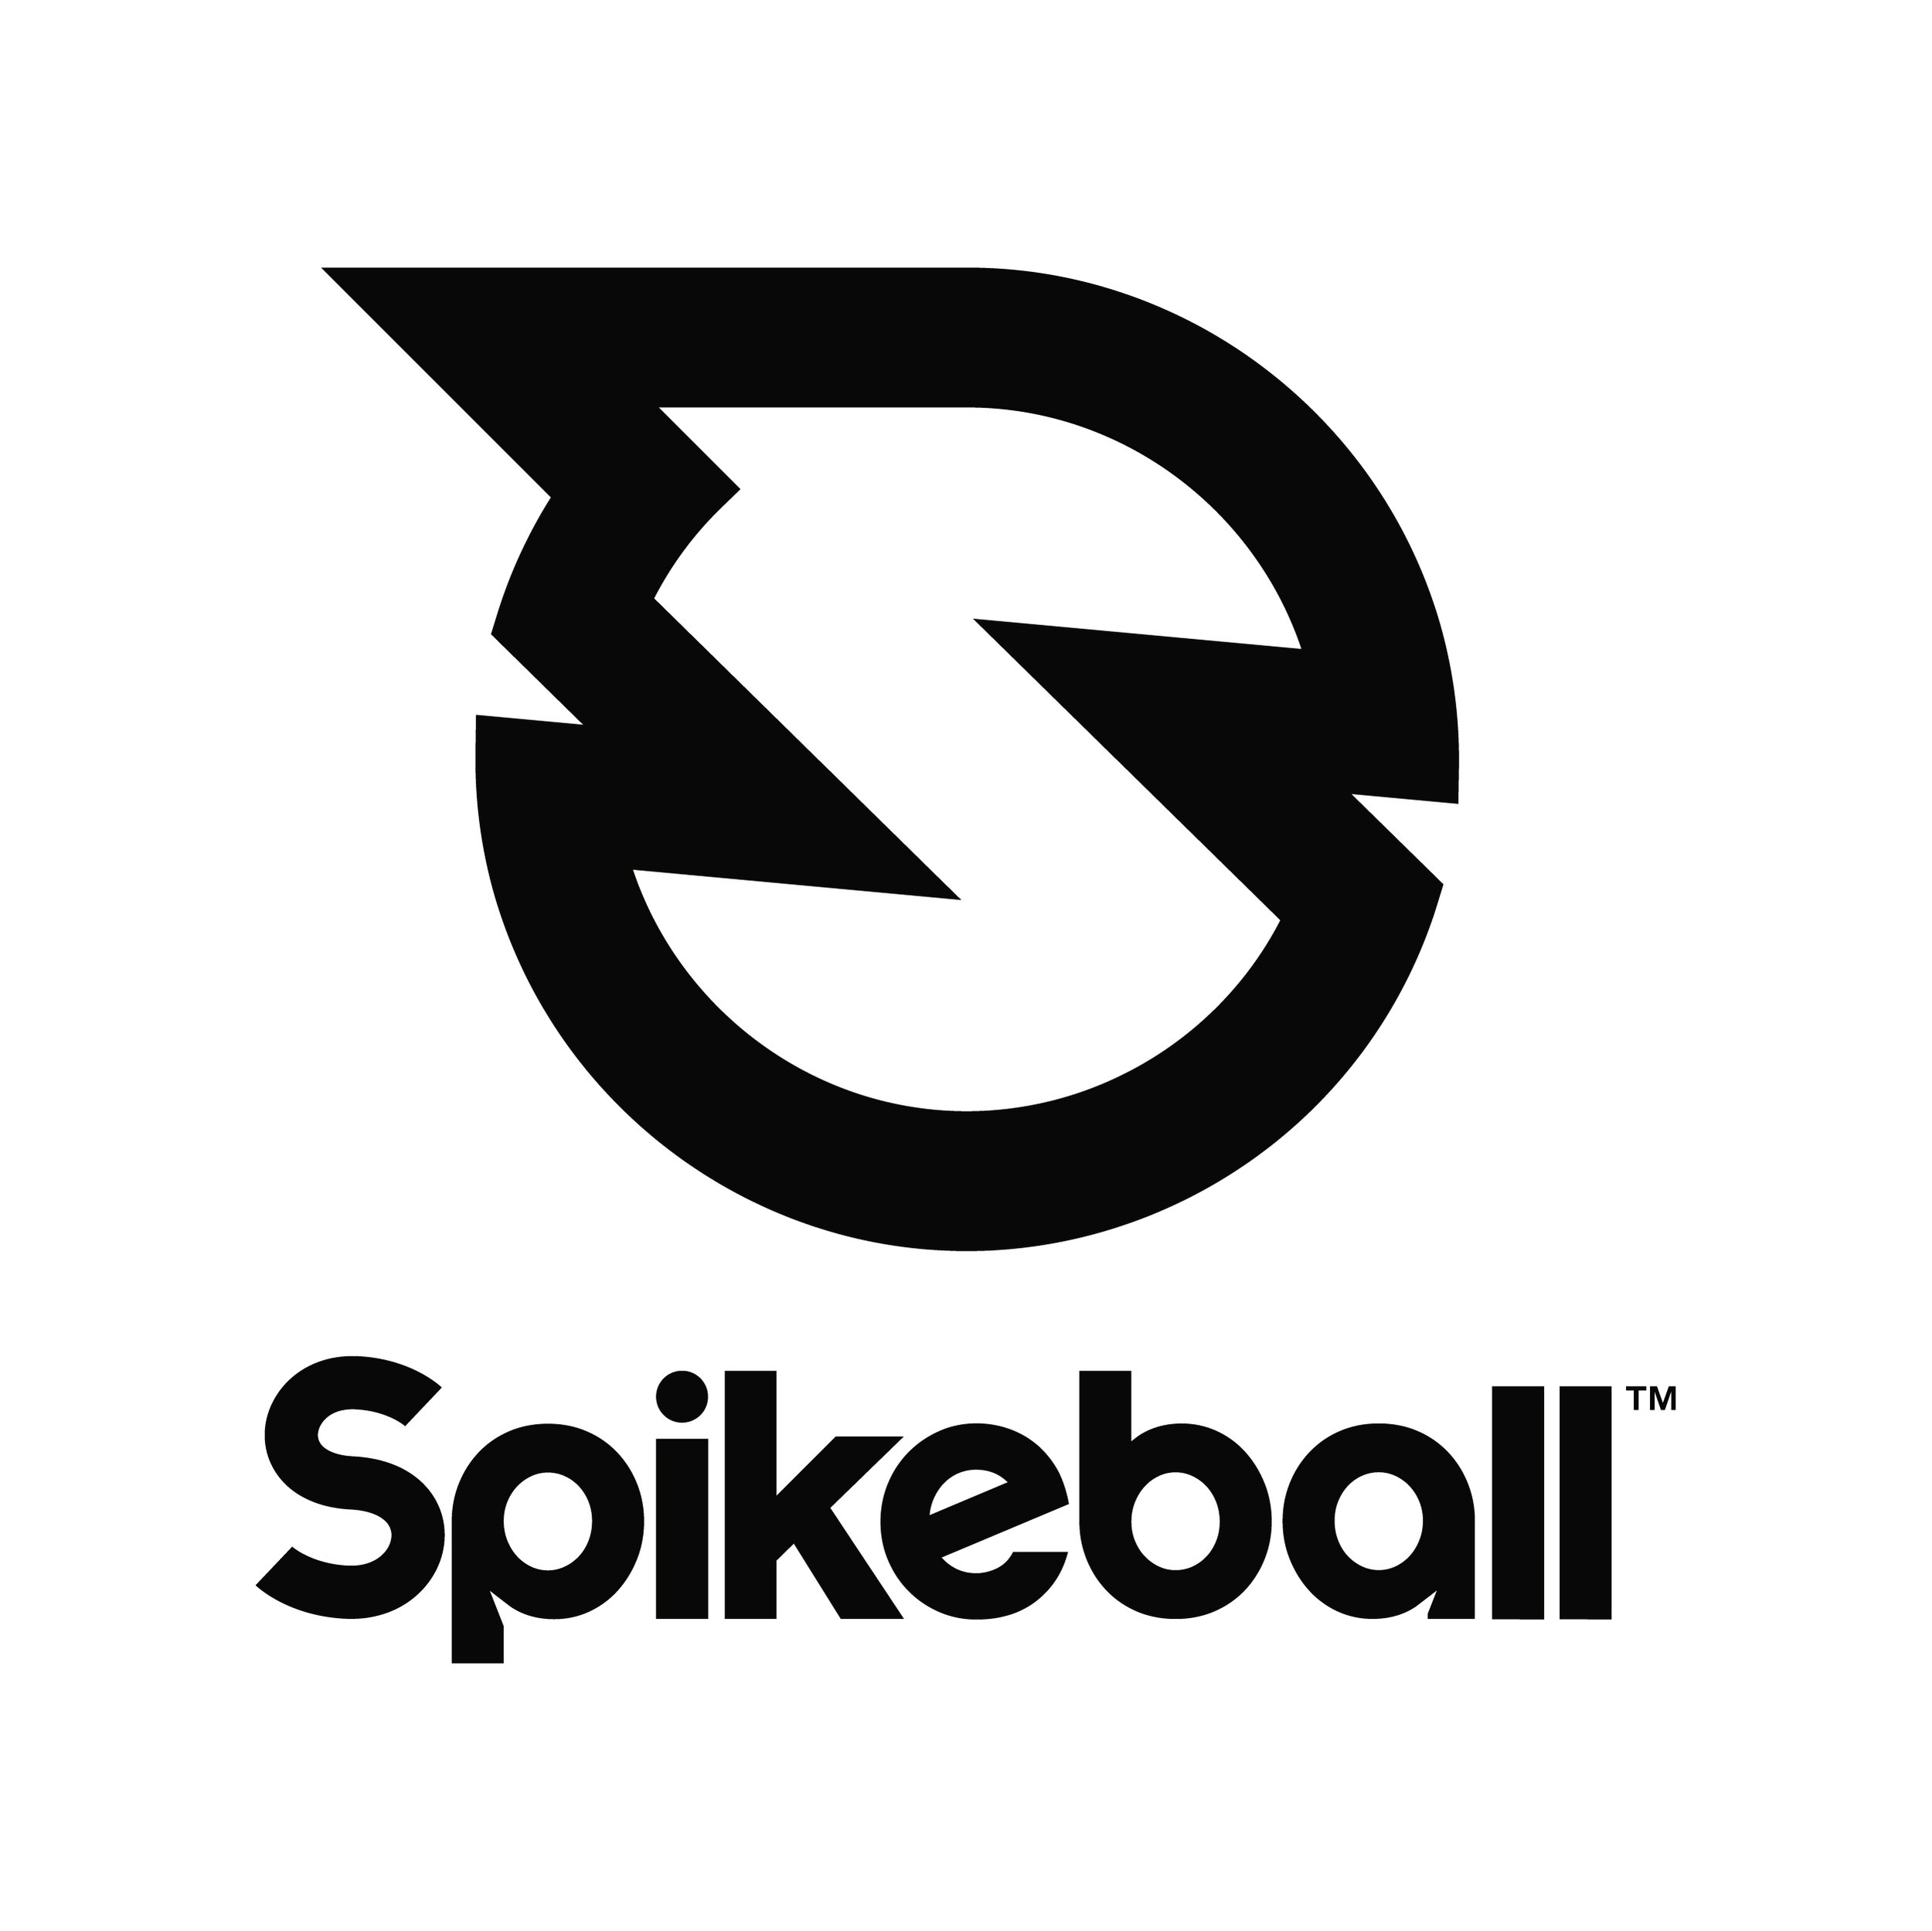 2022 Spikeball Roundnet World Championship - Men's Championship 